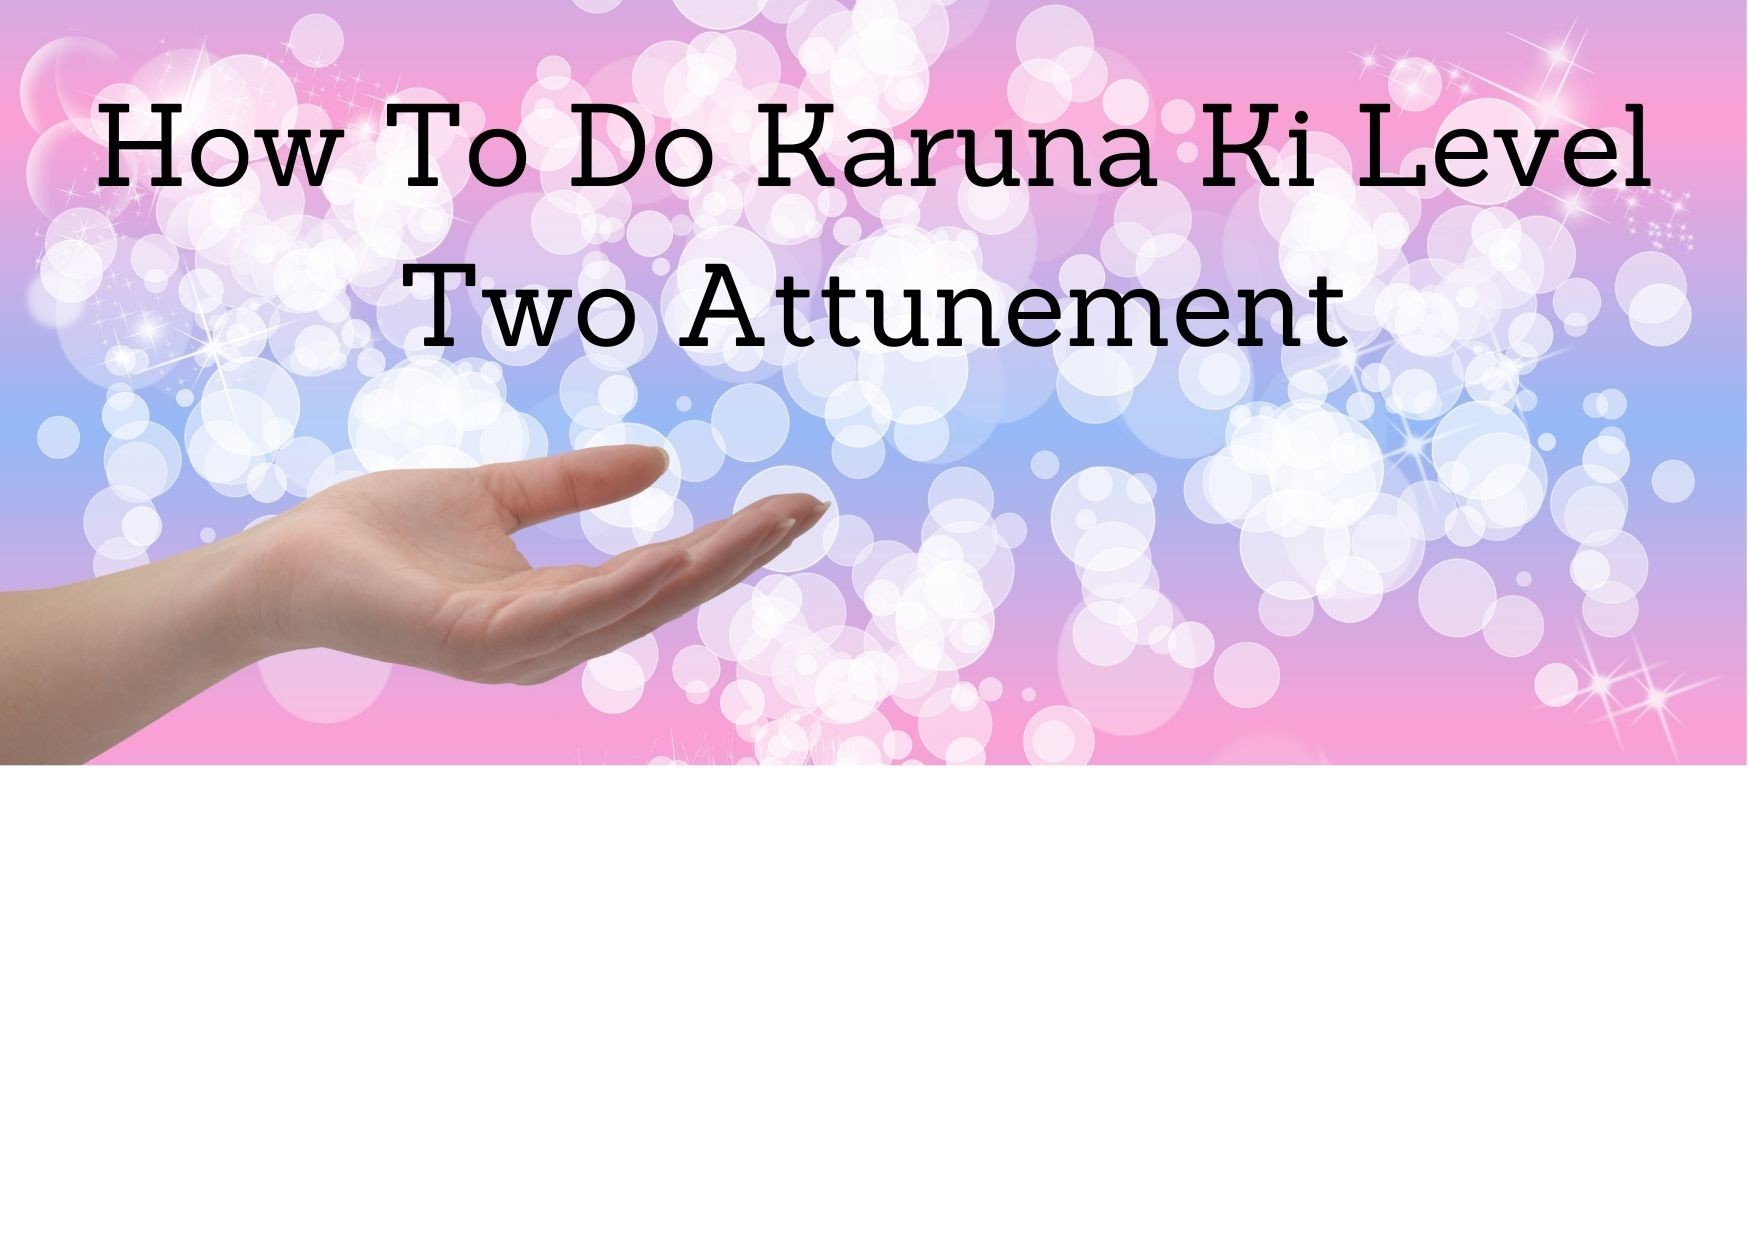 How To Do Karuna Ki Level Two Attunement